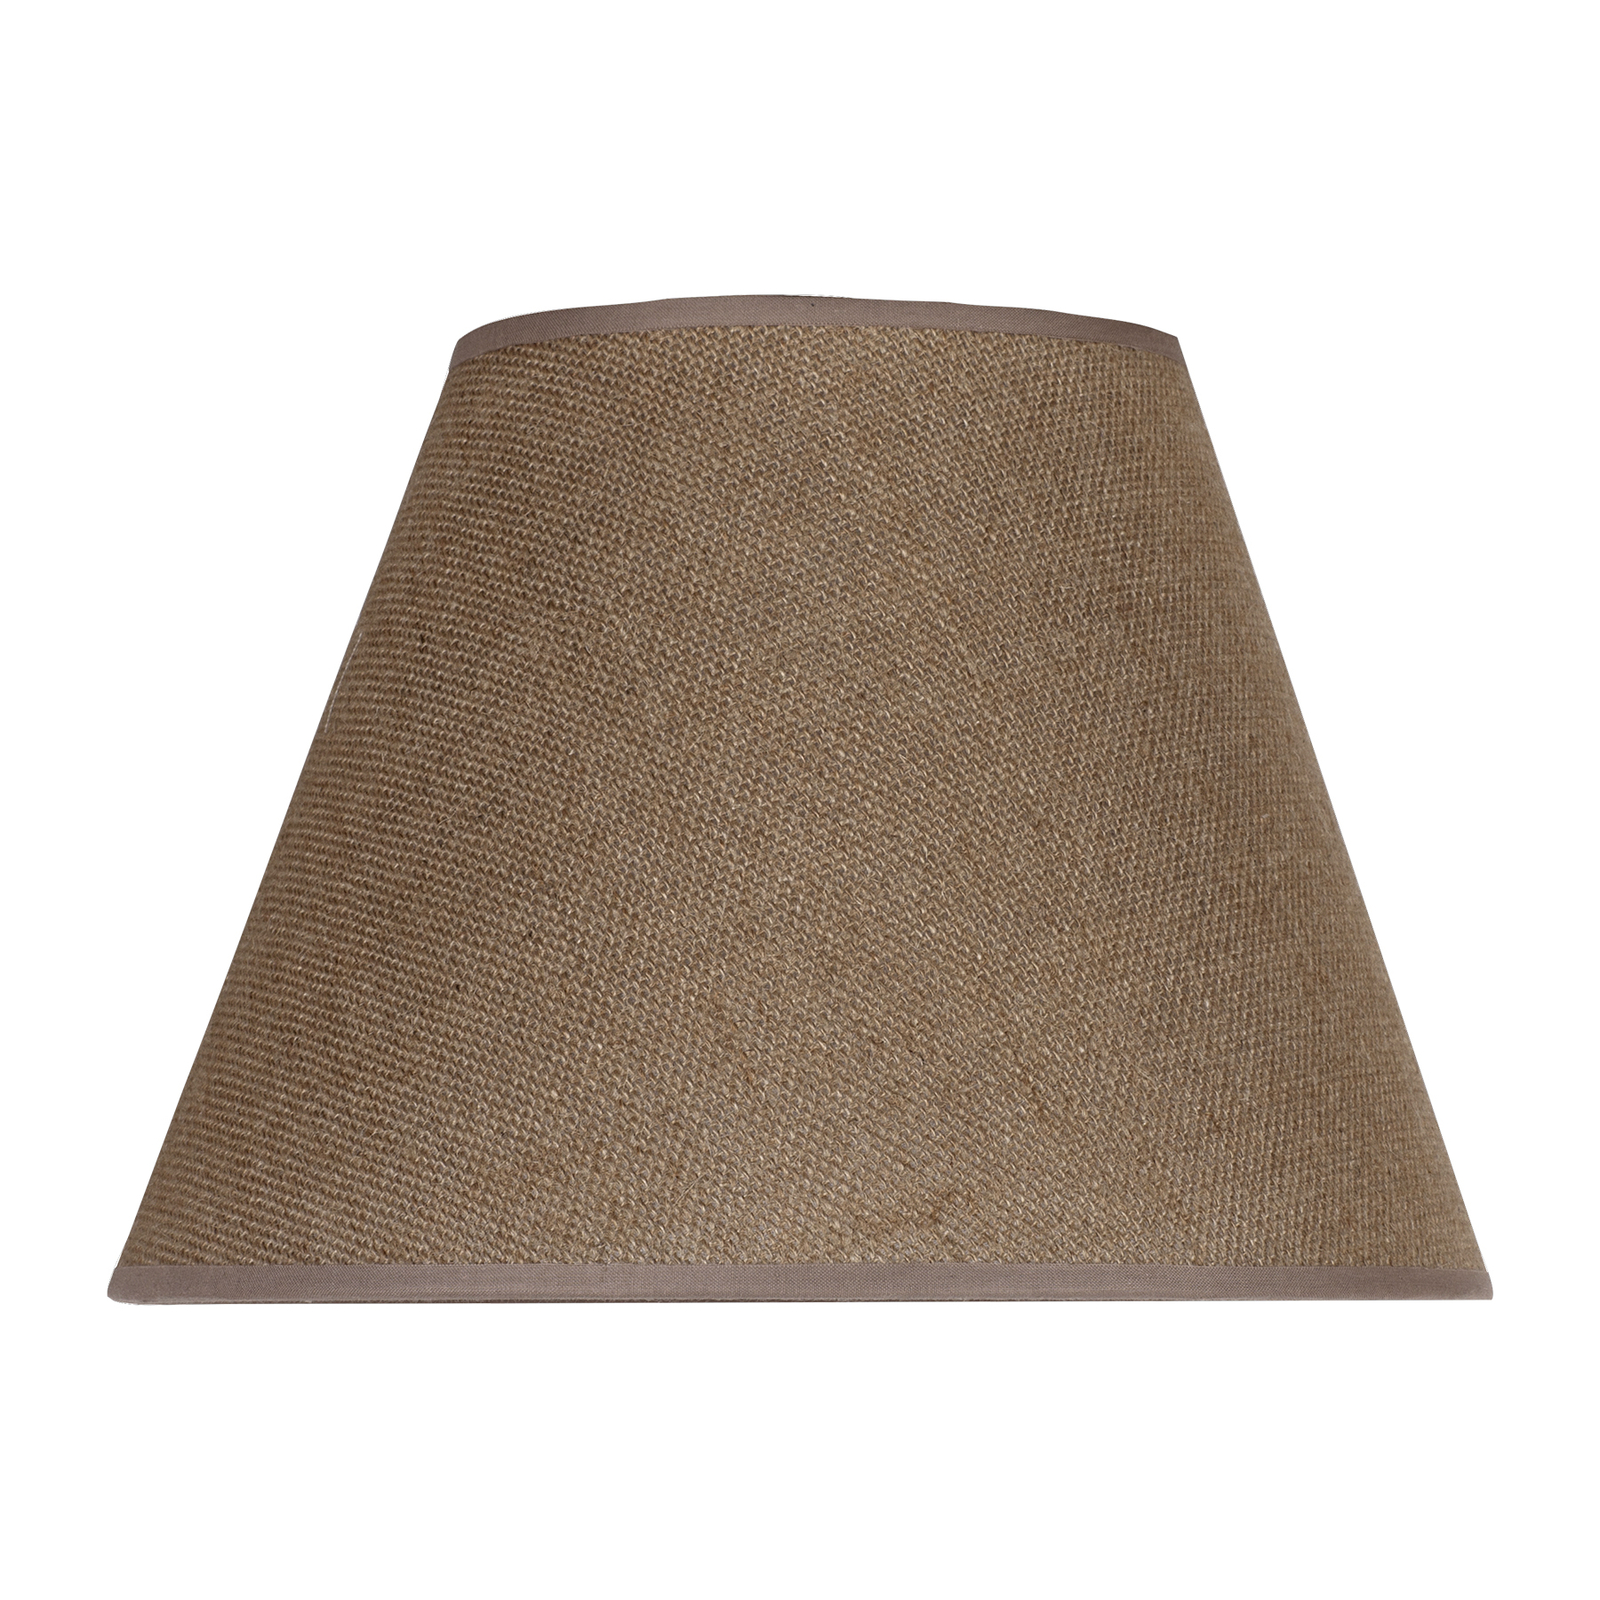 Mini Romance lampshade for floor lamp light brown